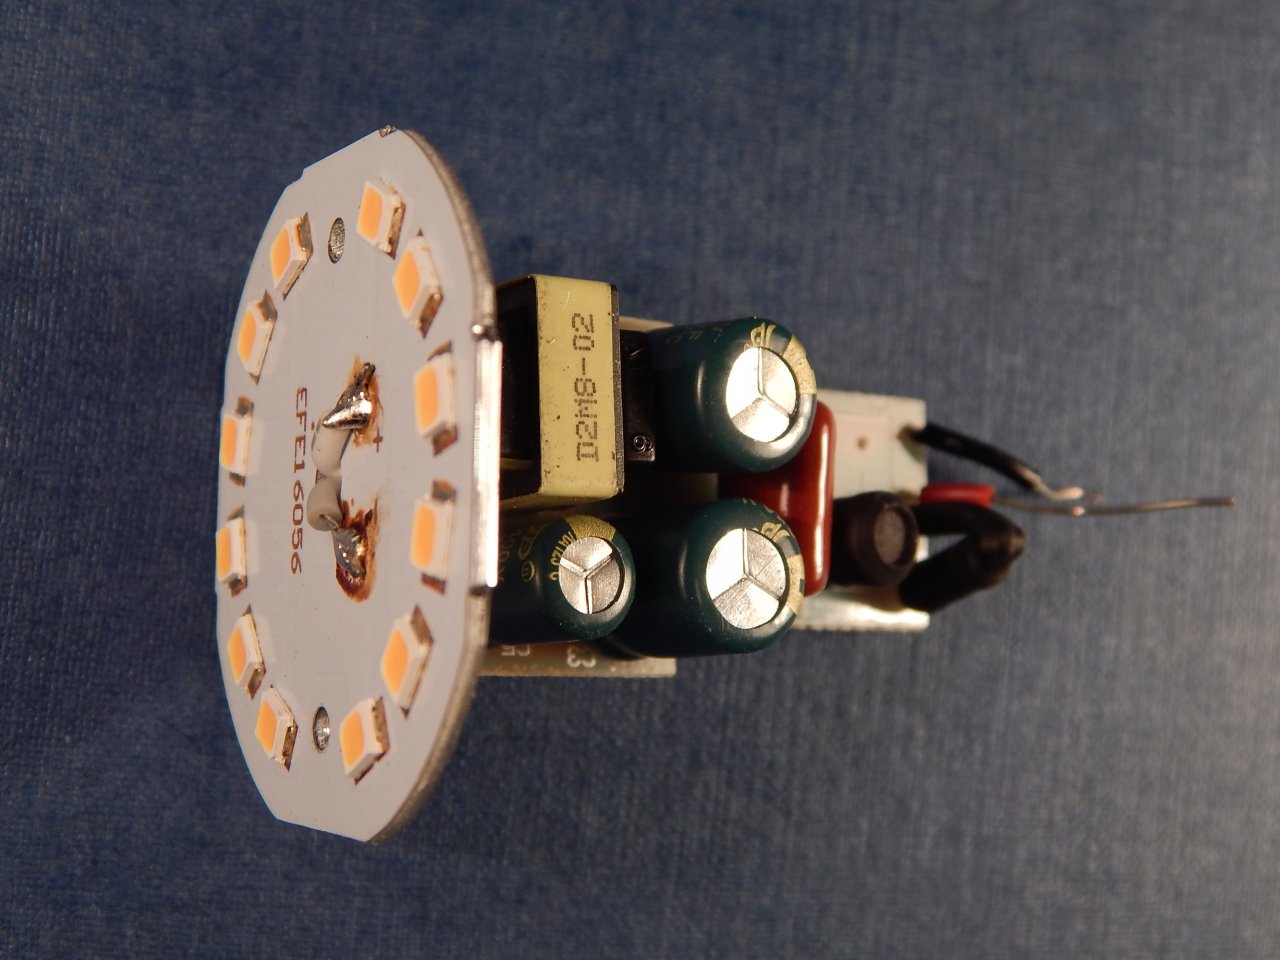 LED Lampe defekt - warum? - Mikrocontroller.net